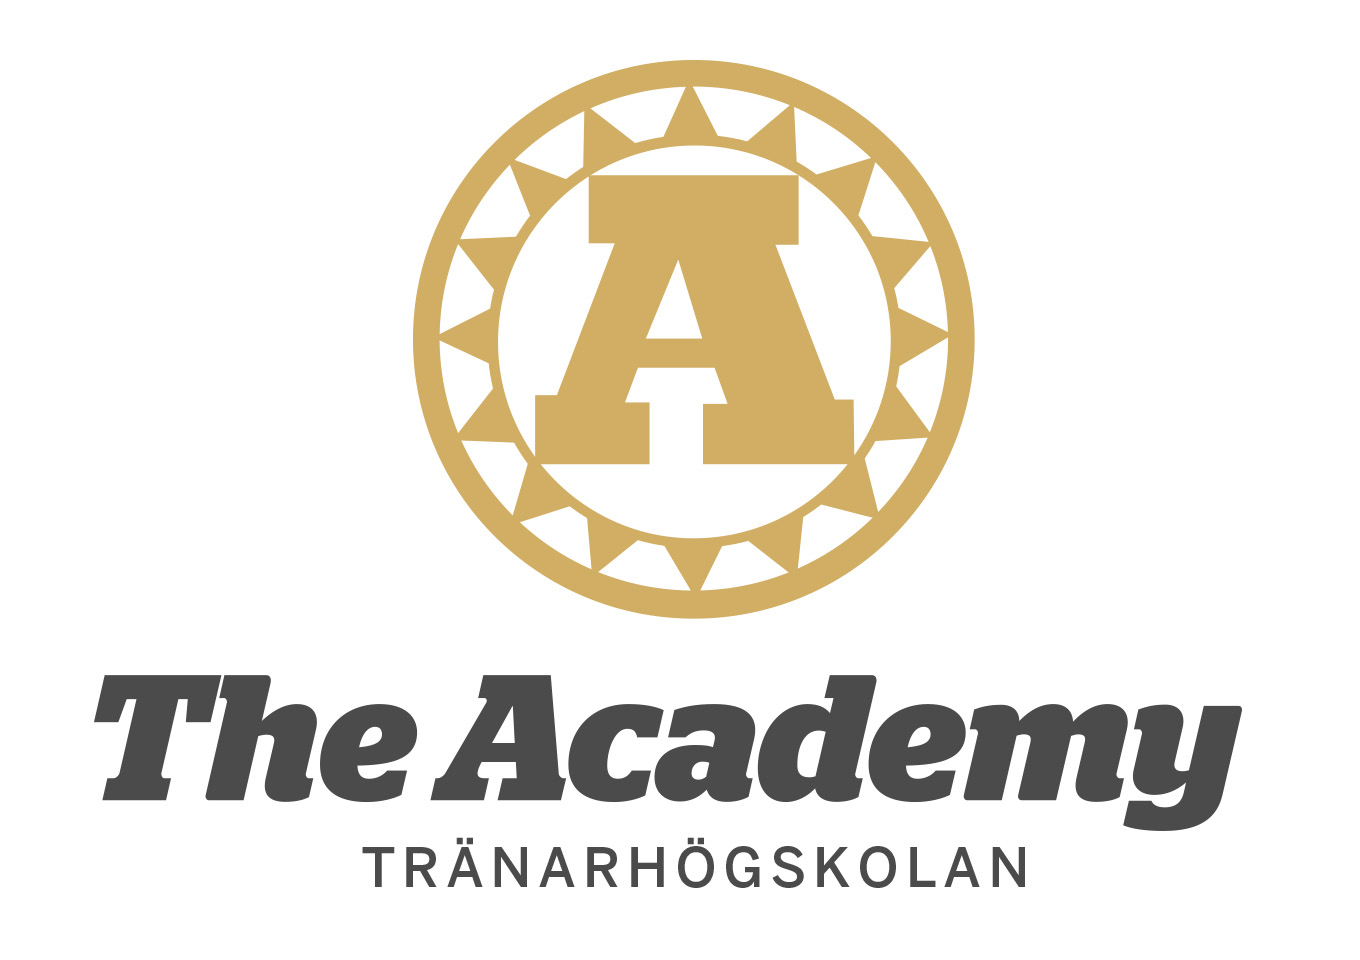 A The Academy TRÄNARHÖGSKOLAN